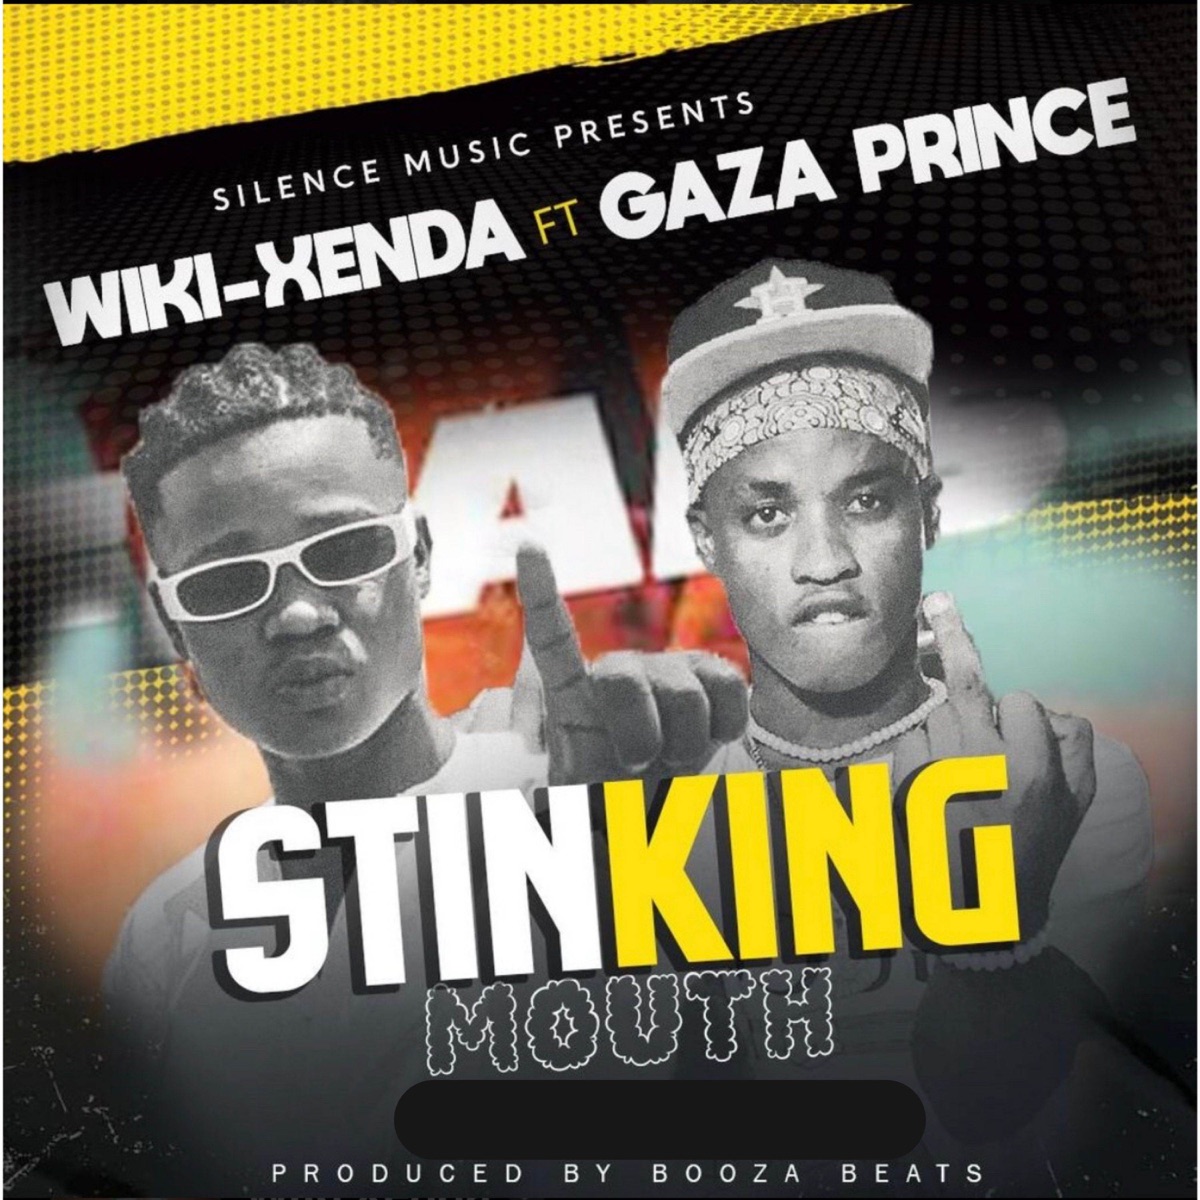 Stinking Mouth (feat. Gaza Prince) - Single - Album by Wiki Xenda - Apple  Music